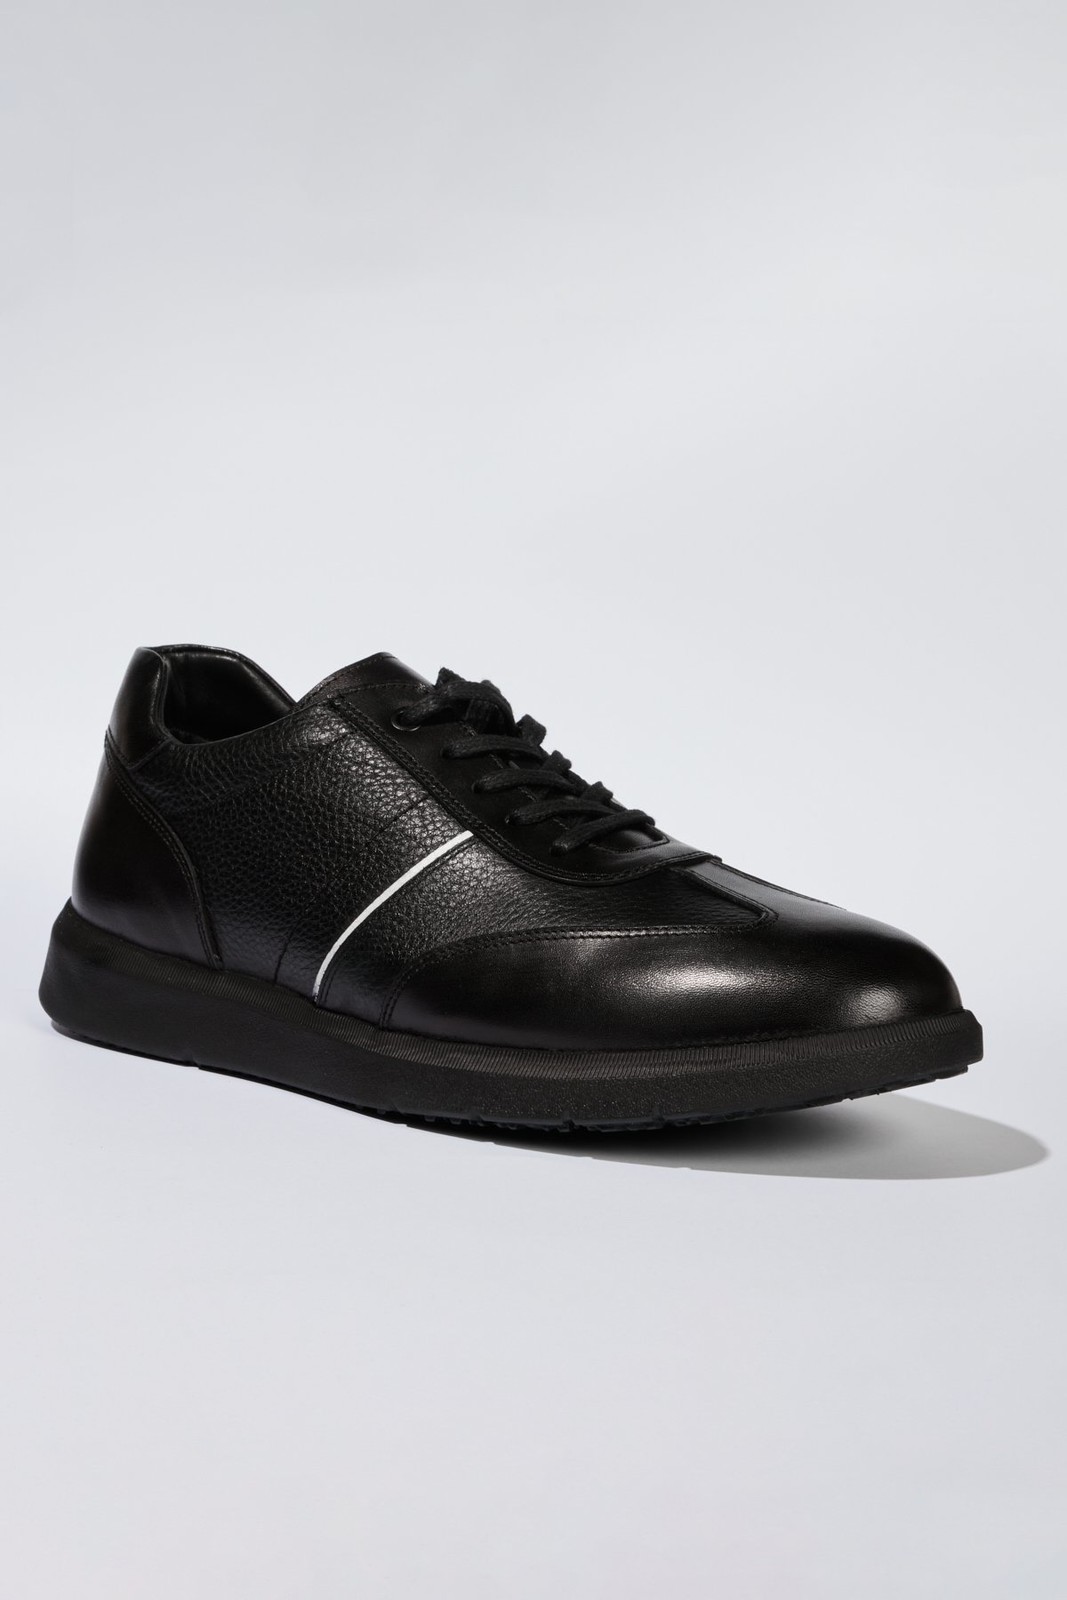 ALTINYILDIZ CLASSICS Men's Black 100% Leather Sneaker Shoes